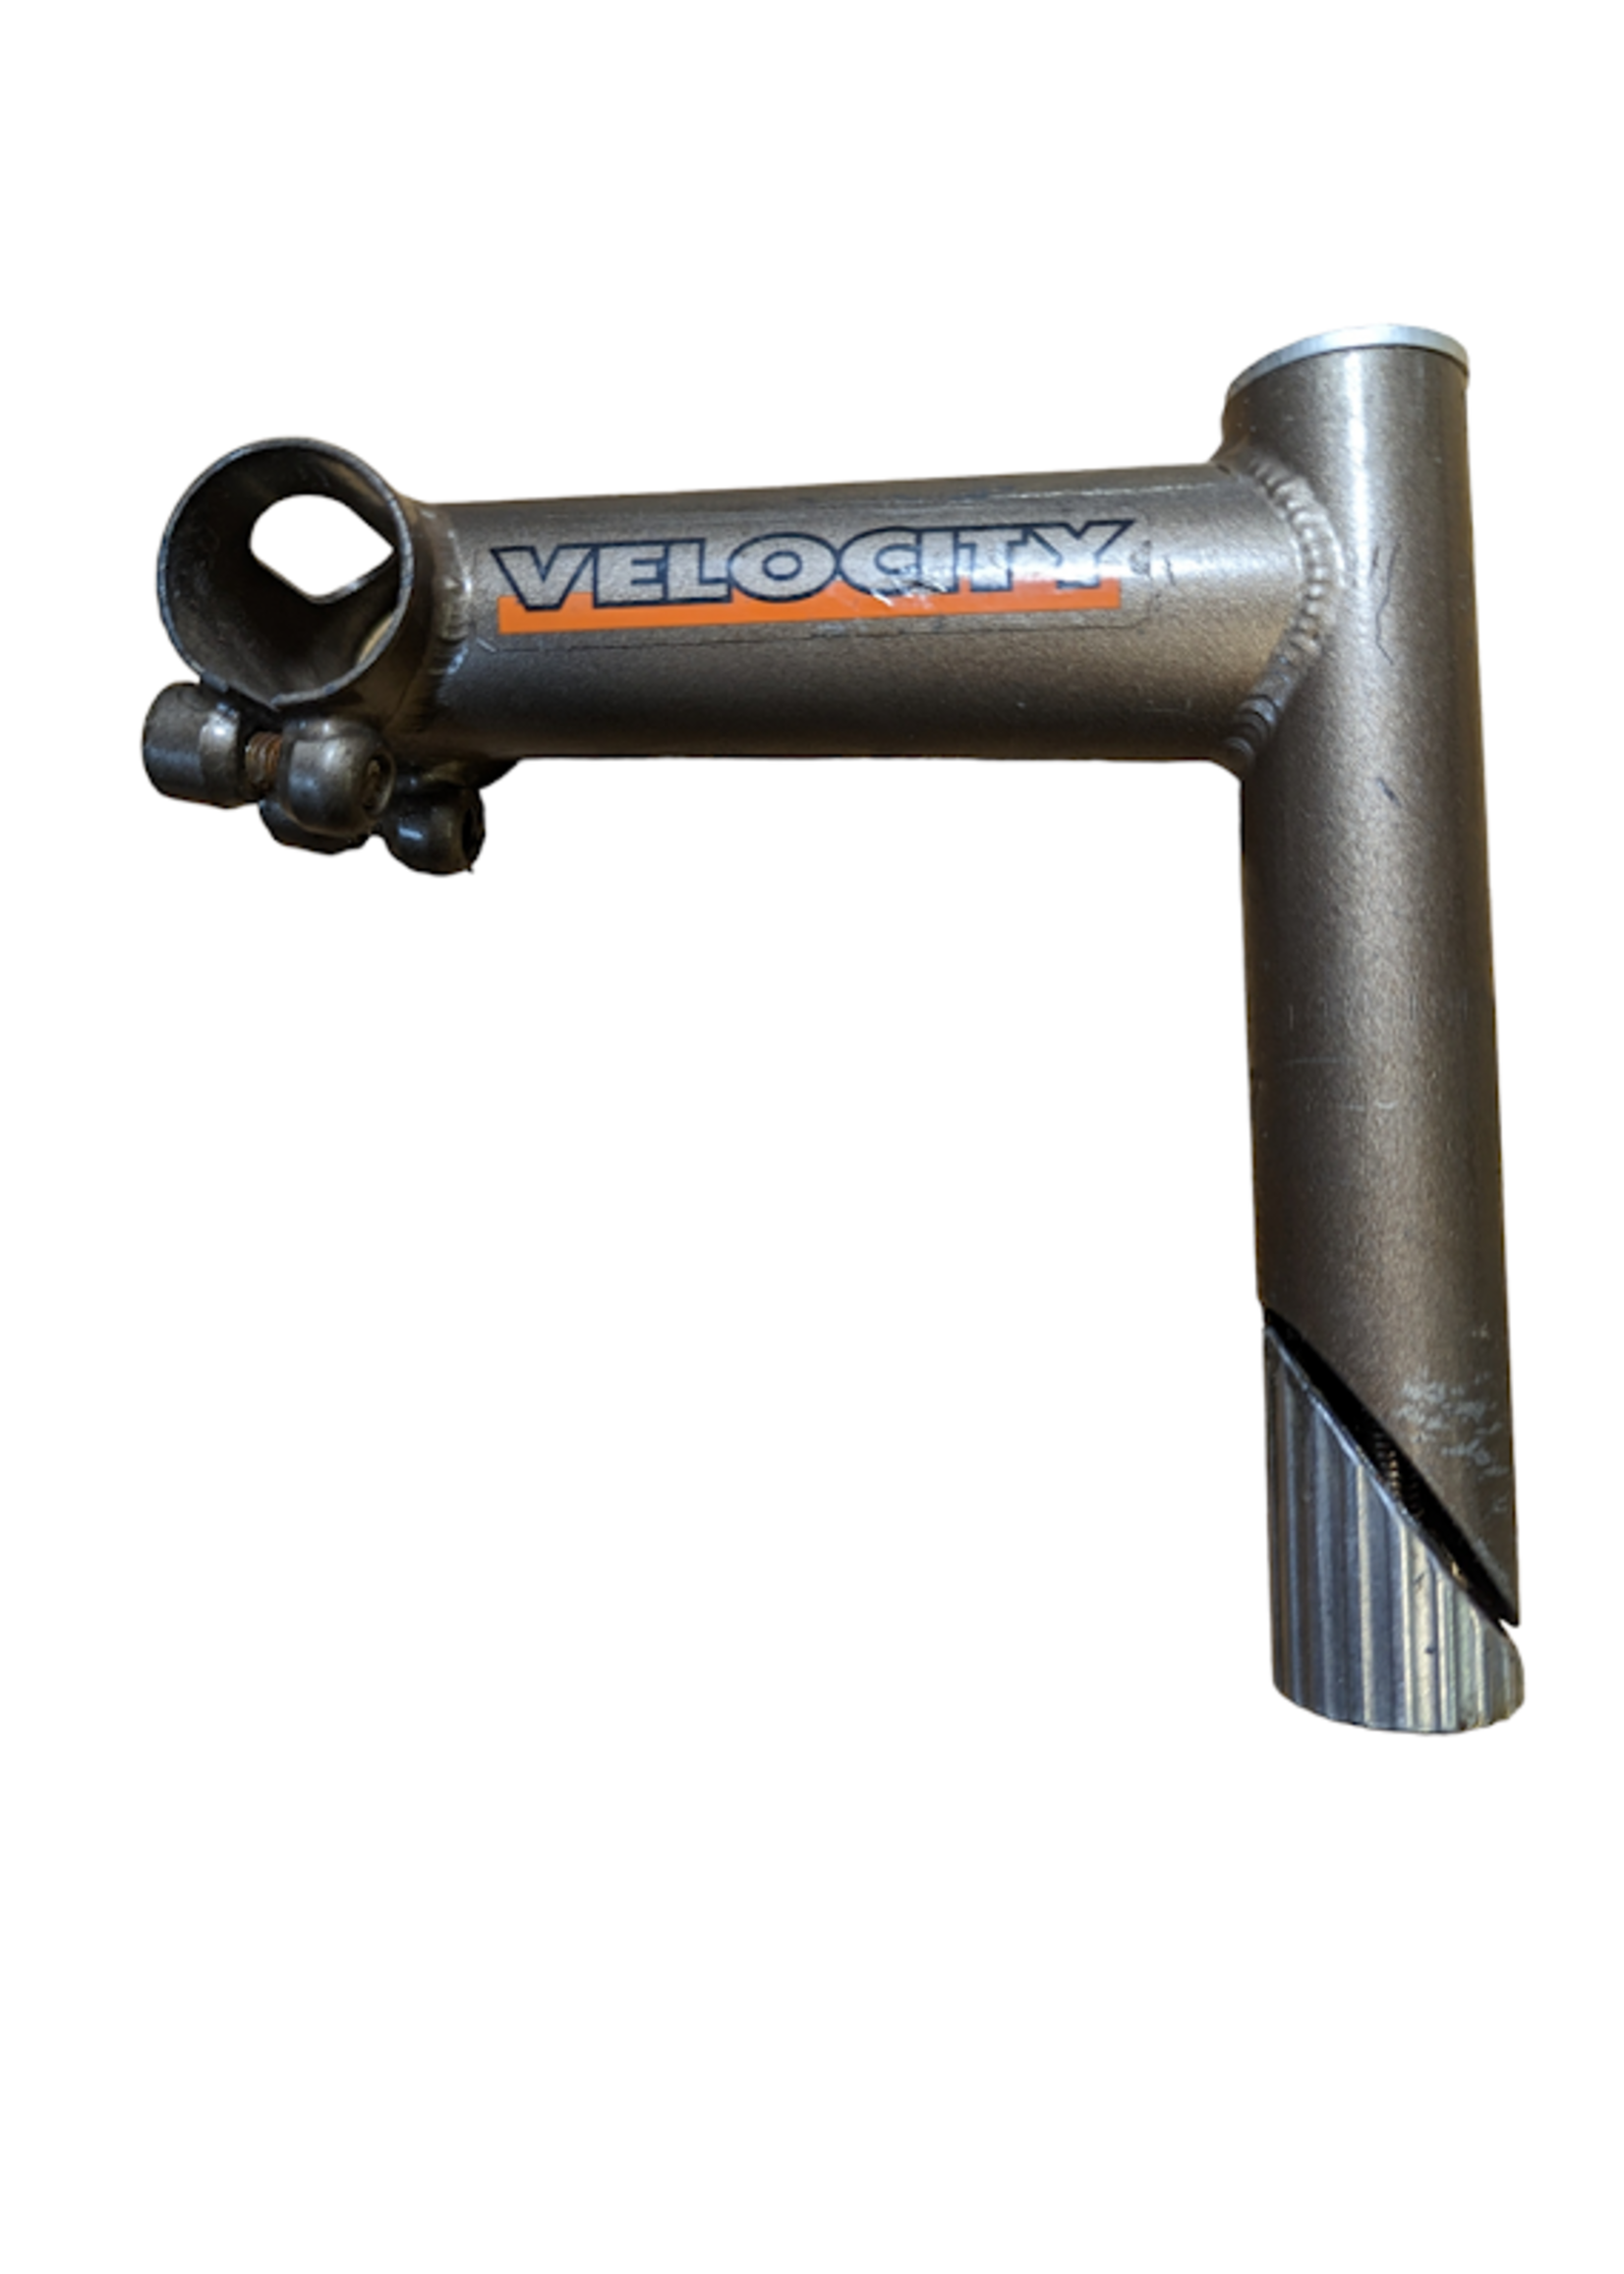 Velocity Stem 1 1/8 quill. 110mm length for 25.4 bars